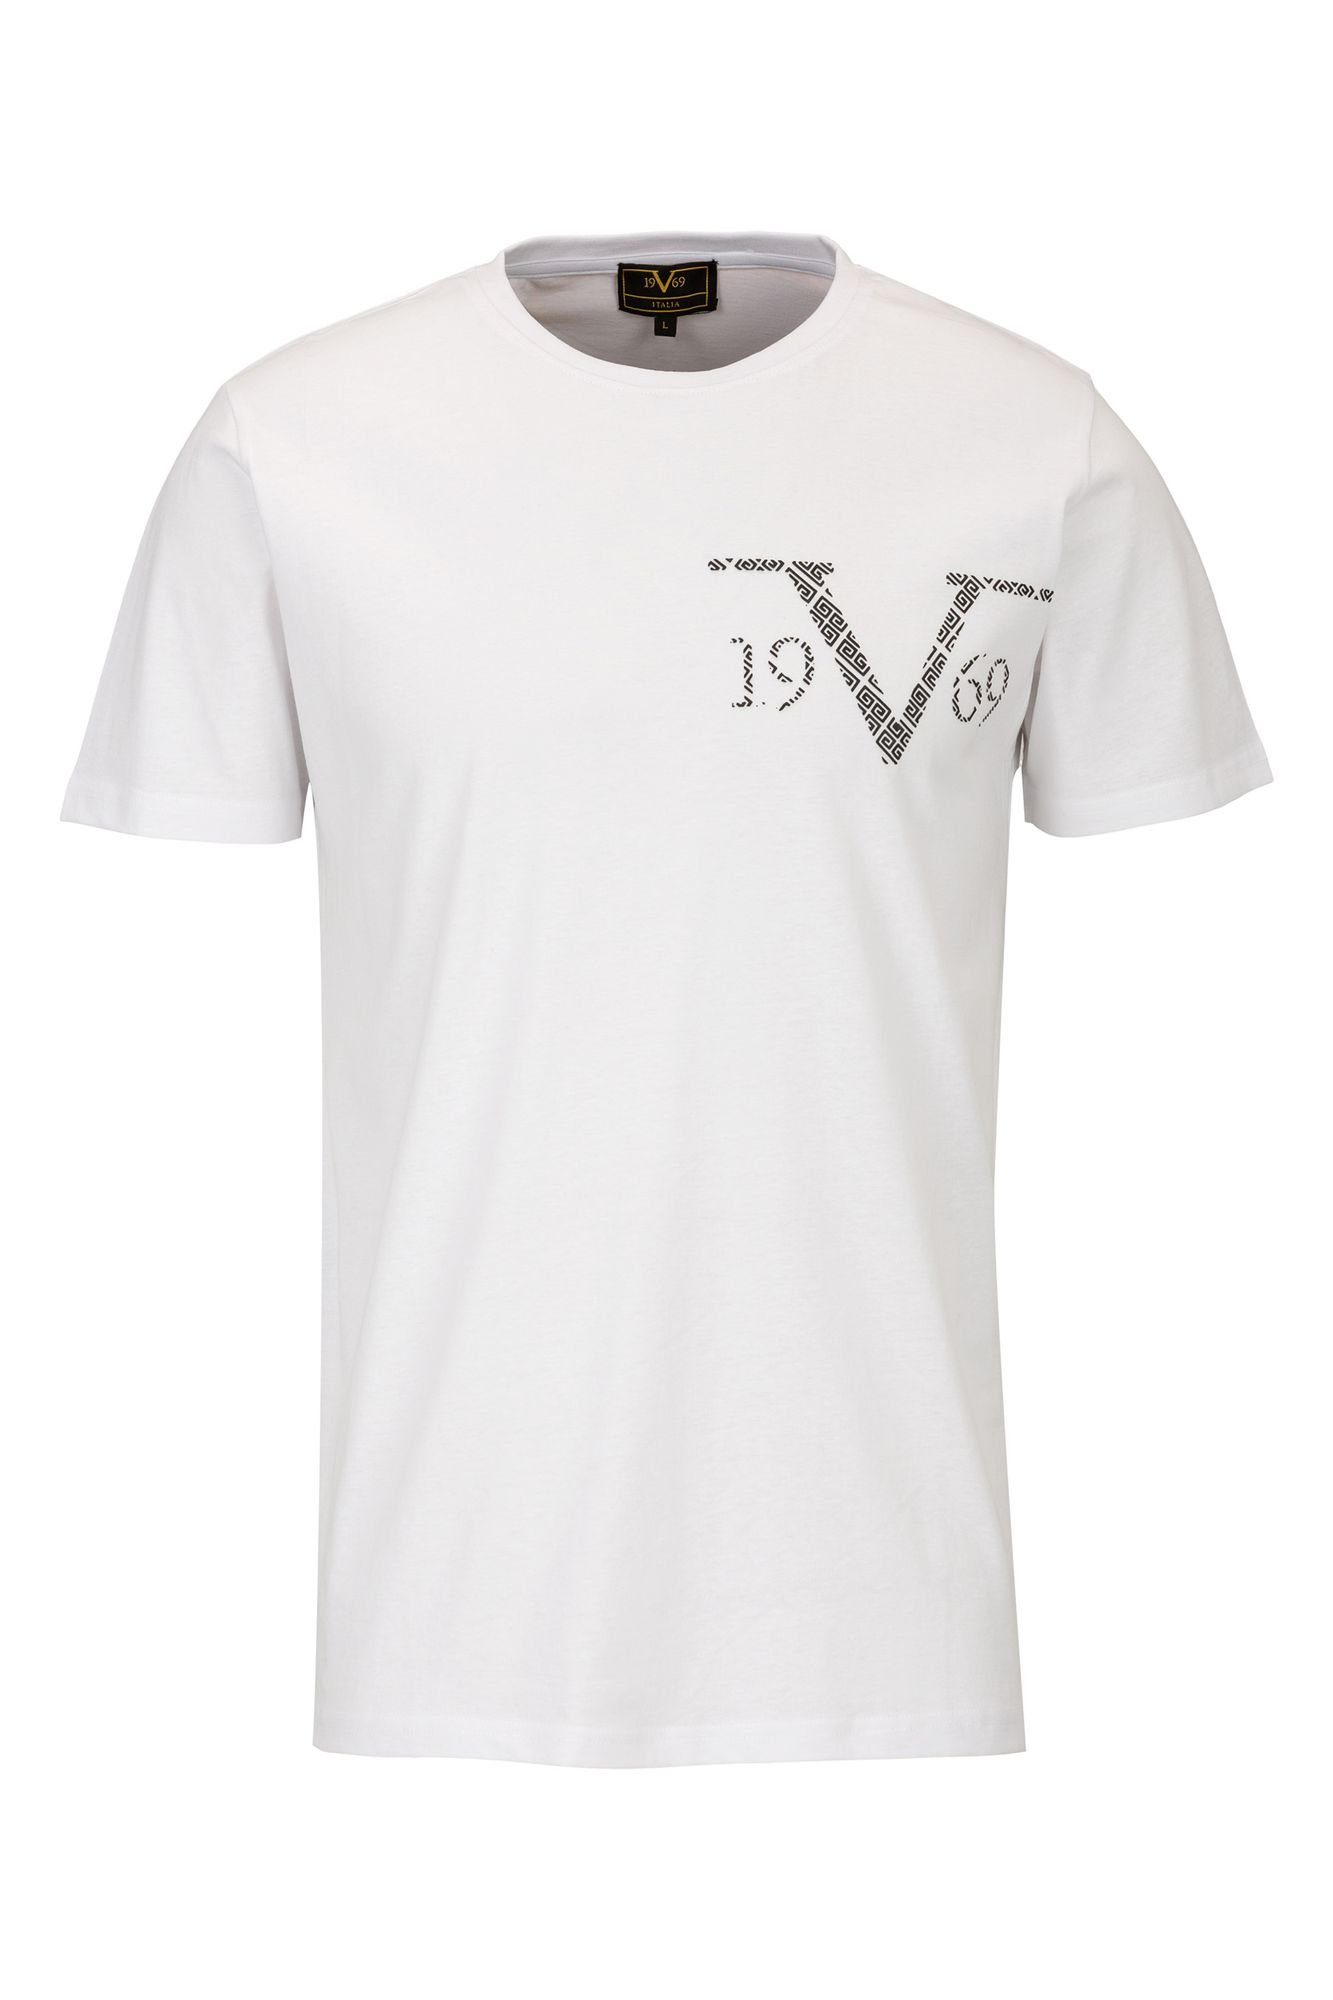 by Italia Versace 19V69 Nicolo T-Shirt